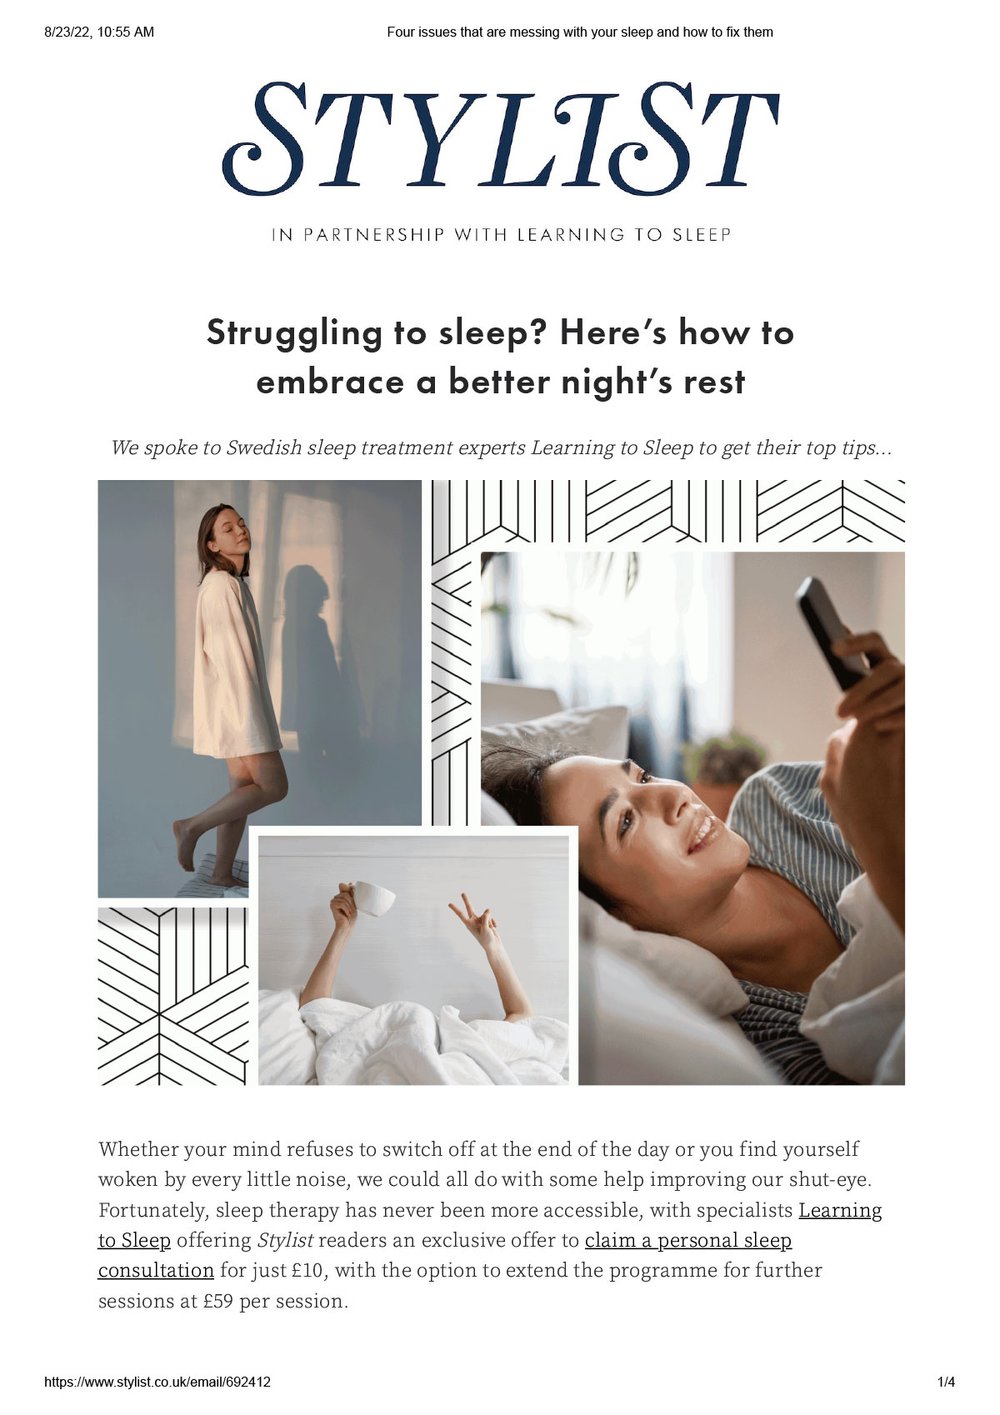 Learning-to-Sleep-x-Stylist-Partnership-Email-22.08.22-2-1.jpg